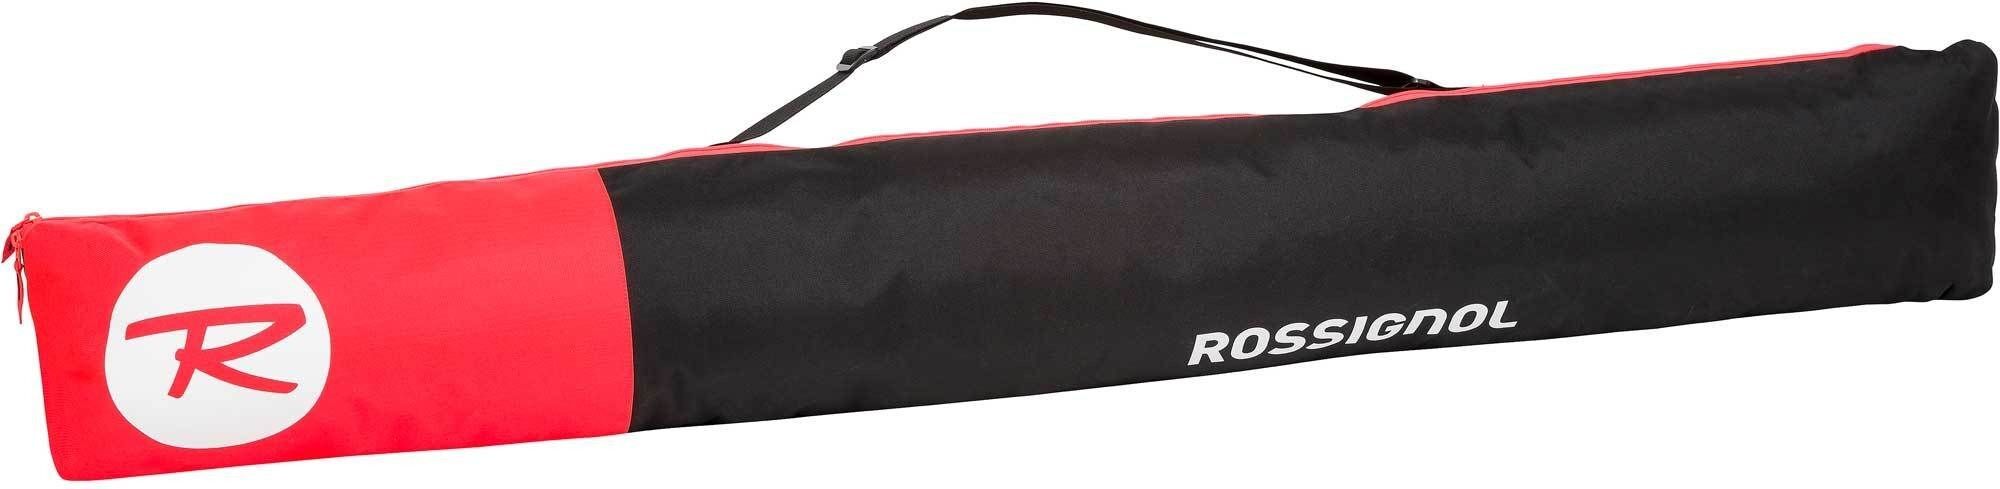 Rossignol Tactic Ski Bag extendable - Skisack